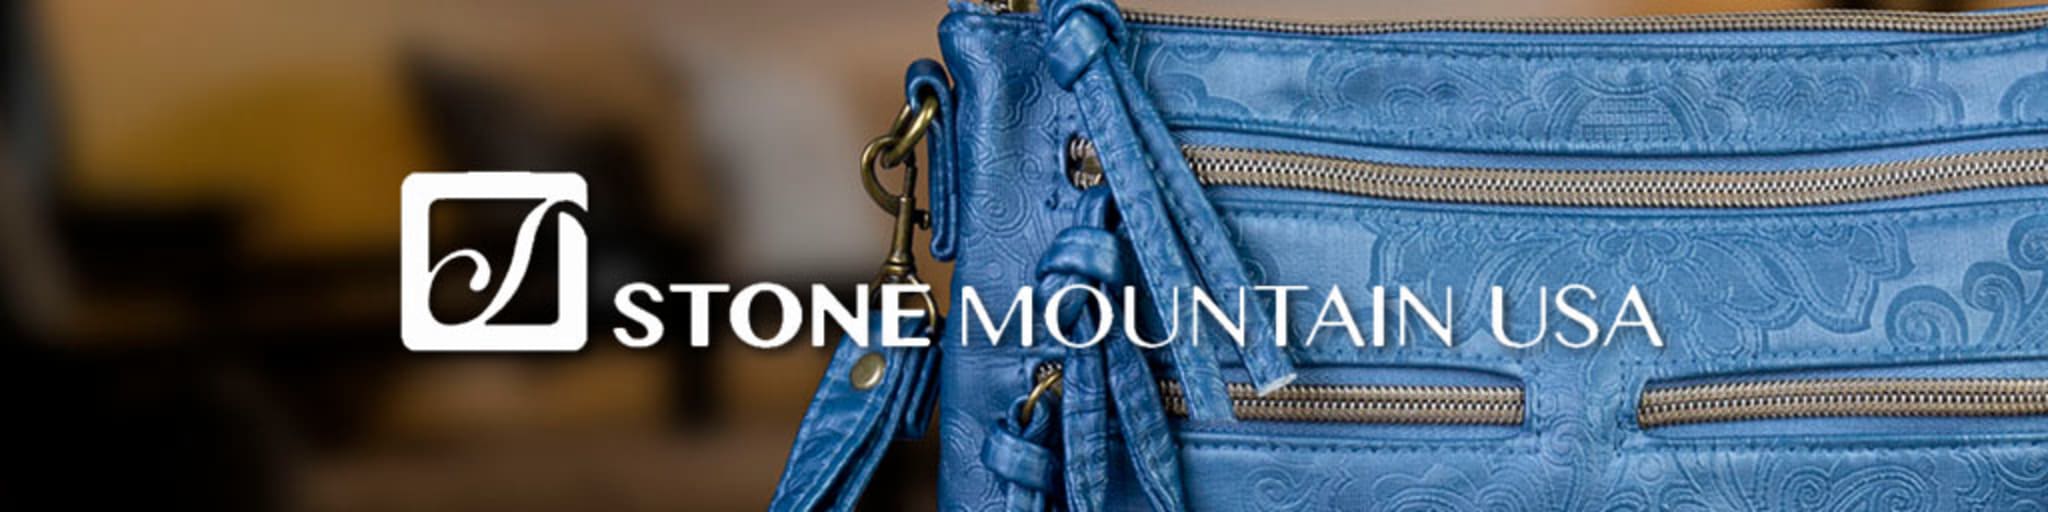 Stone Mountain Handbags Company Store | Capri Tote by Stone Mountain USA